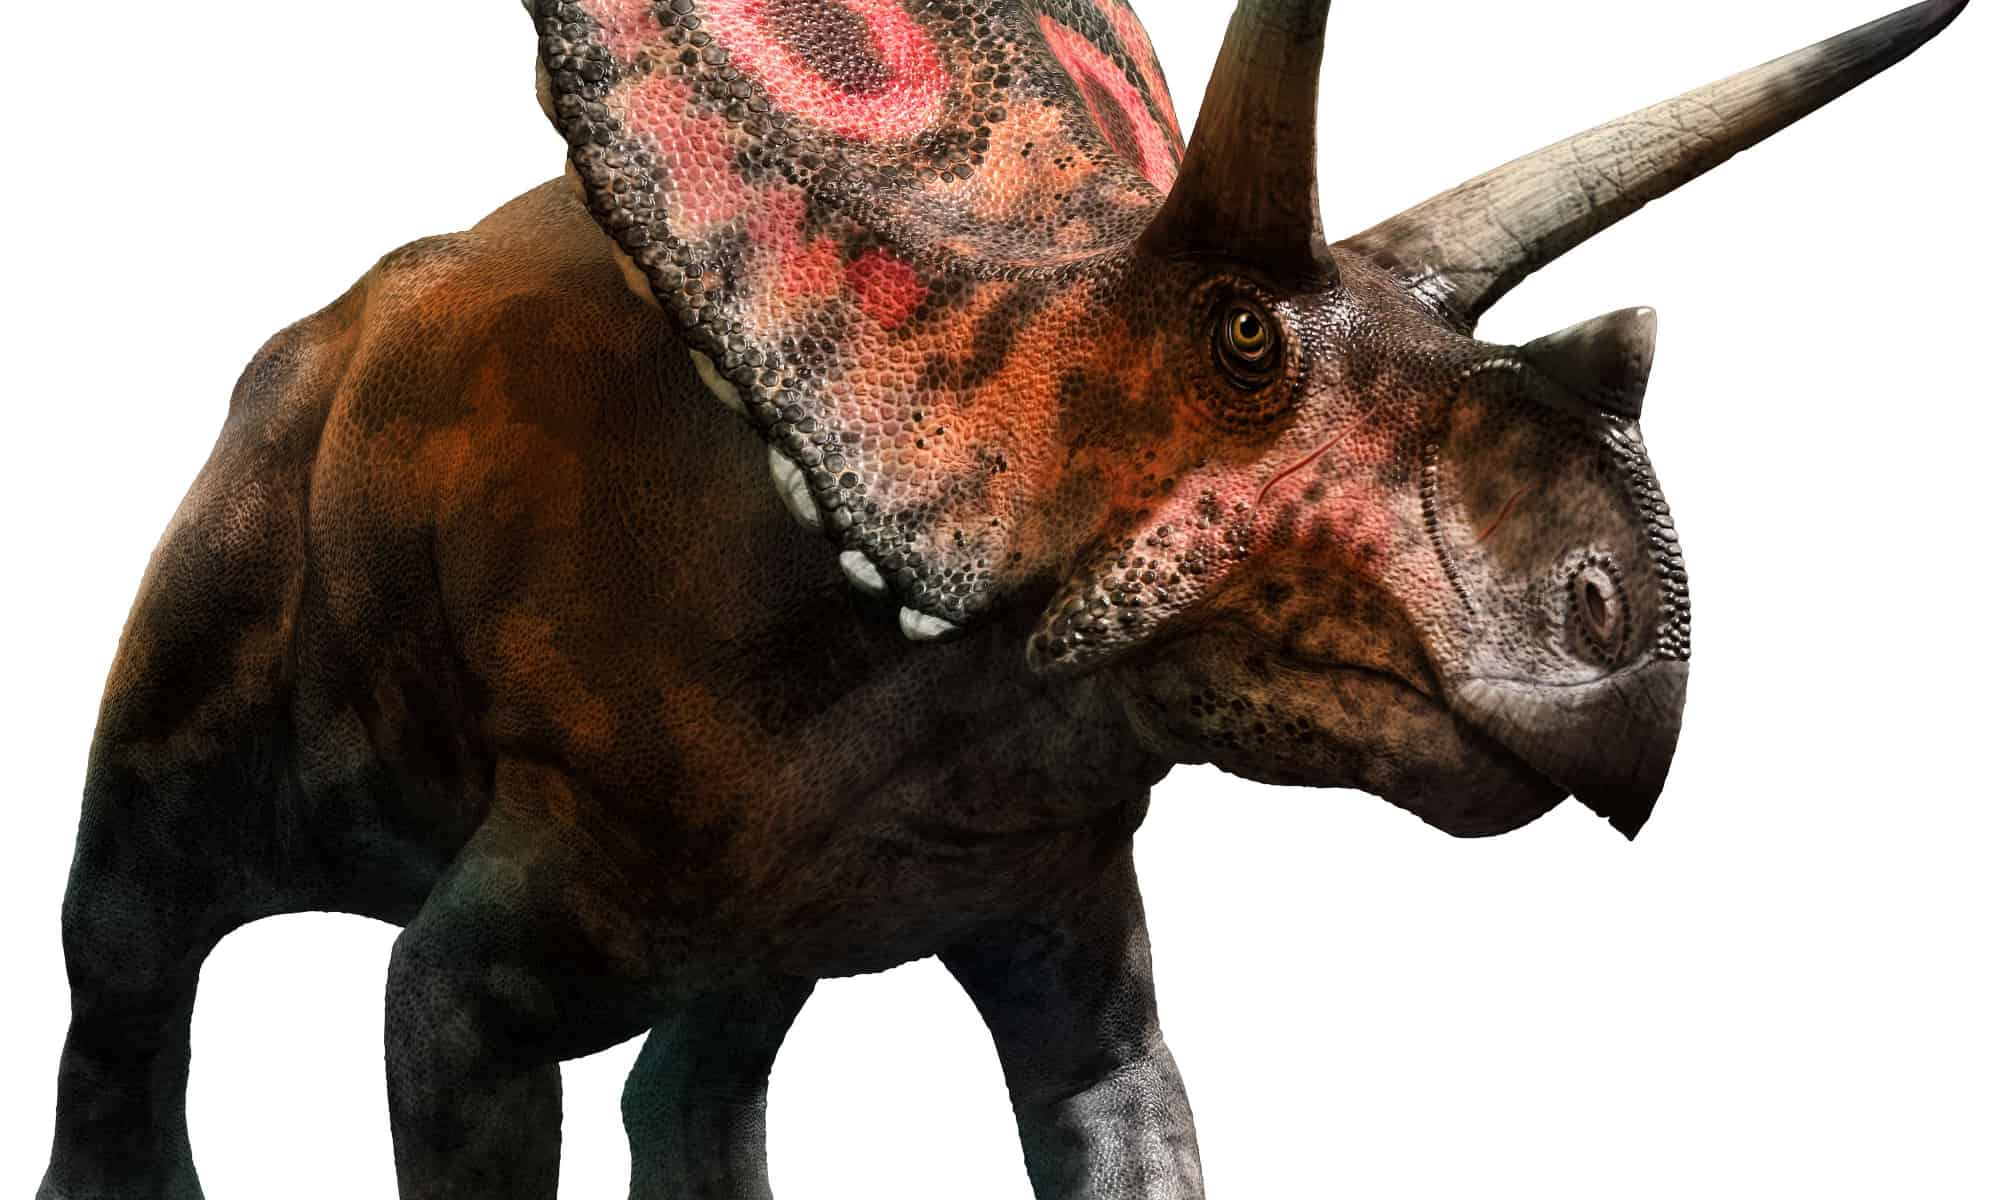 Torosaurus: The Horned Dinosaur with a Mysterious Identity